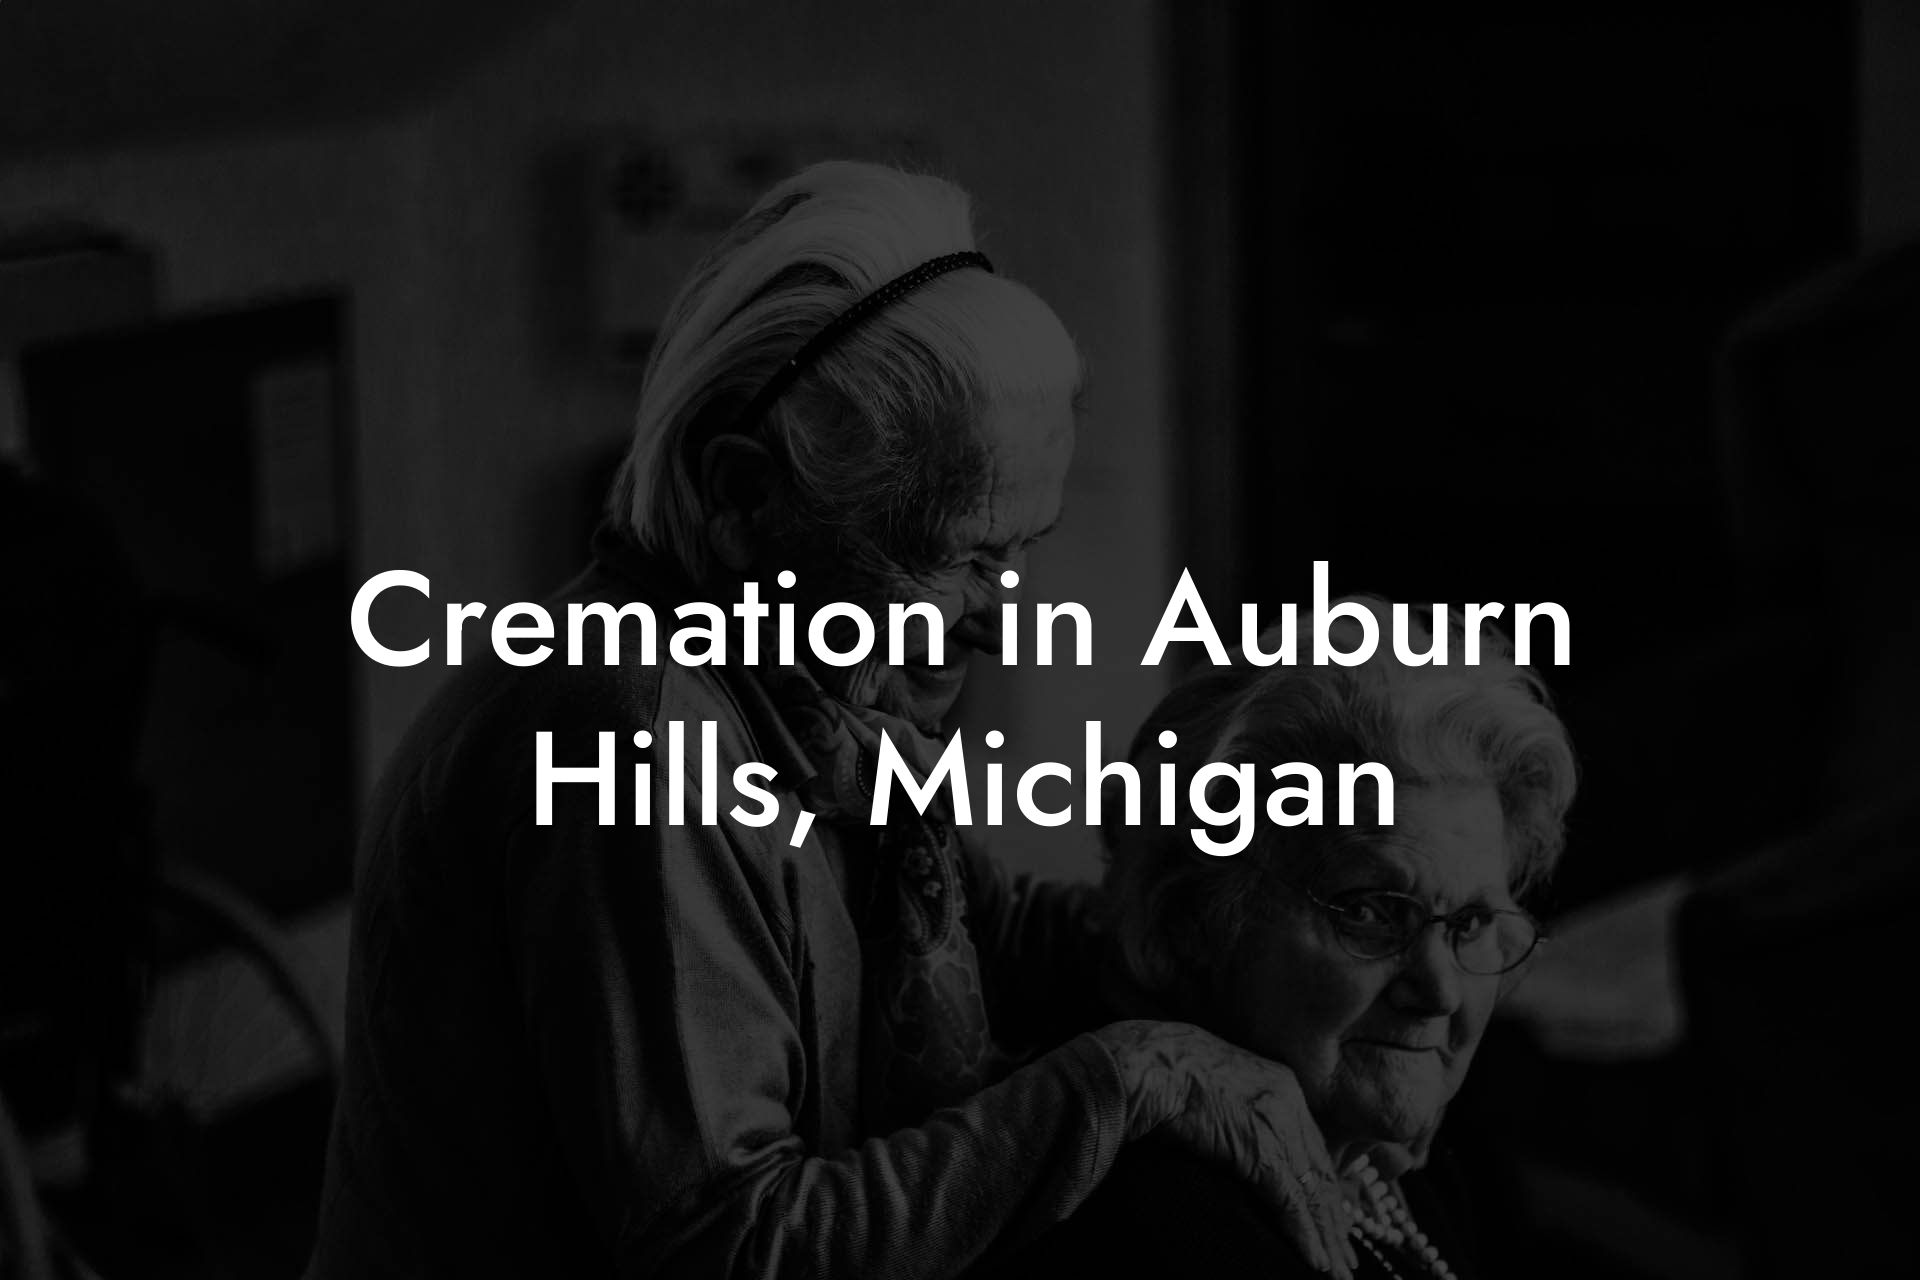 Cremation in Auburn Hills, Michigan